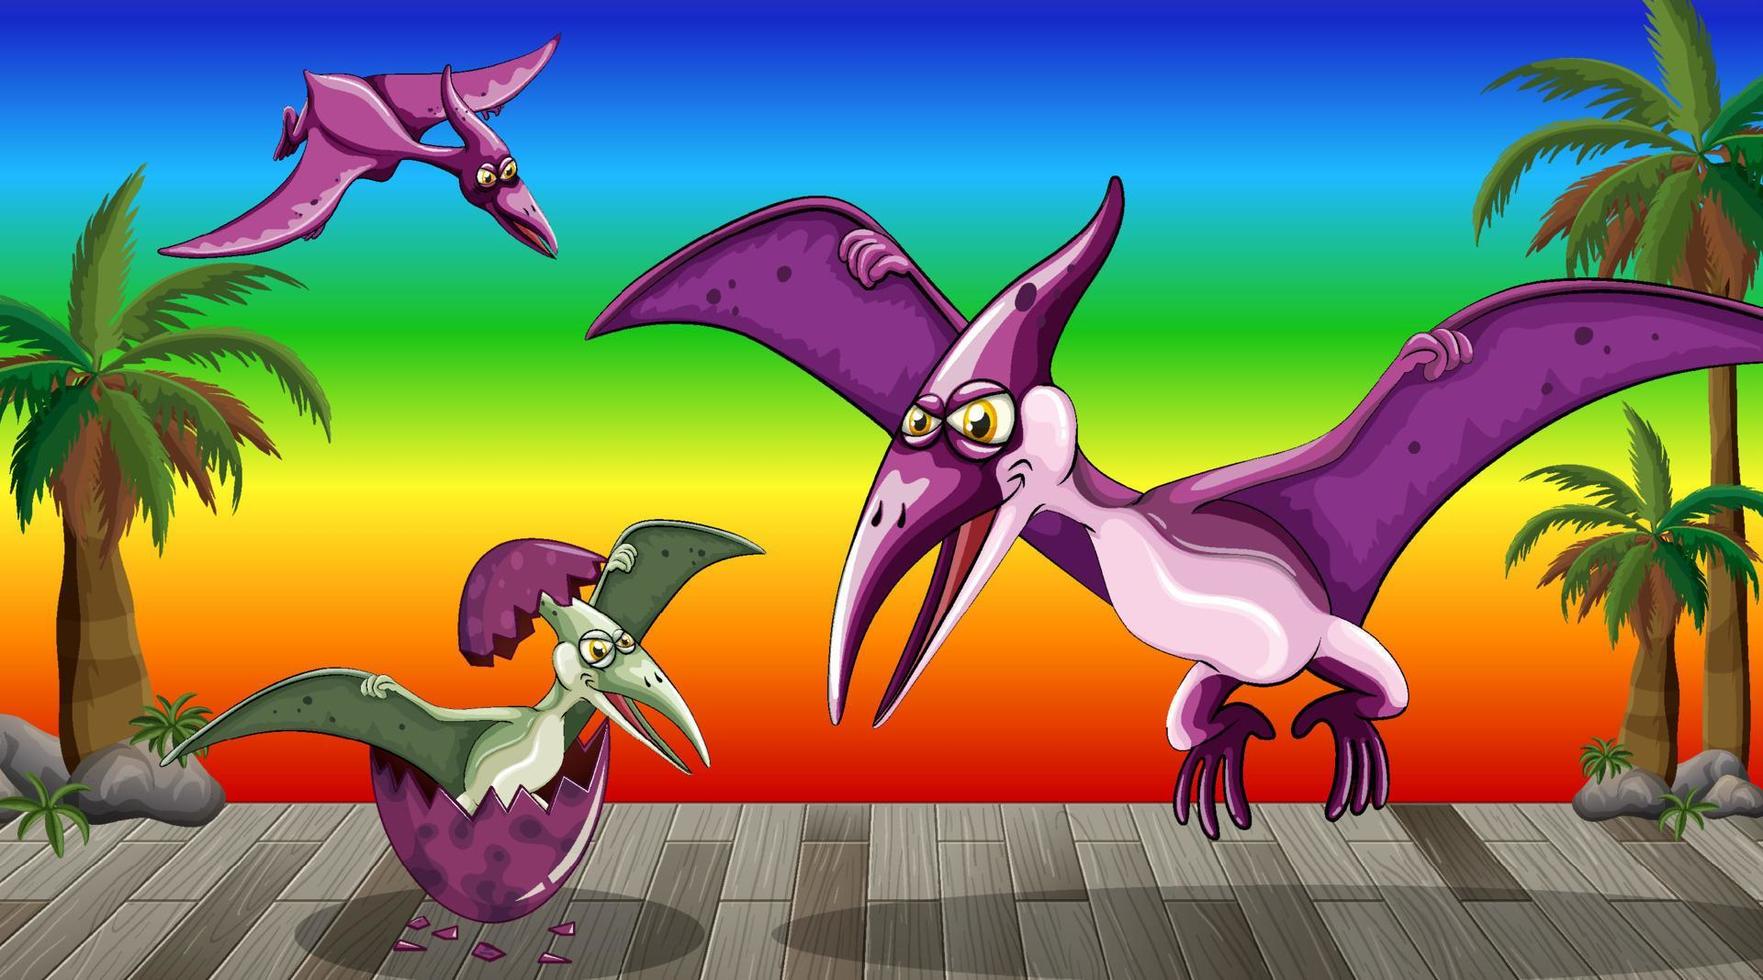 dinosauro cartone animato su sfondo sfumato arcobaleno vettore